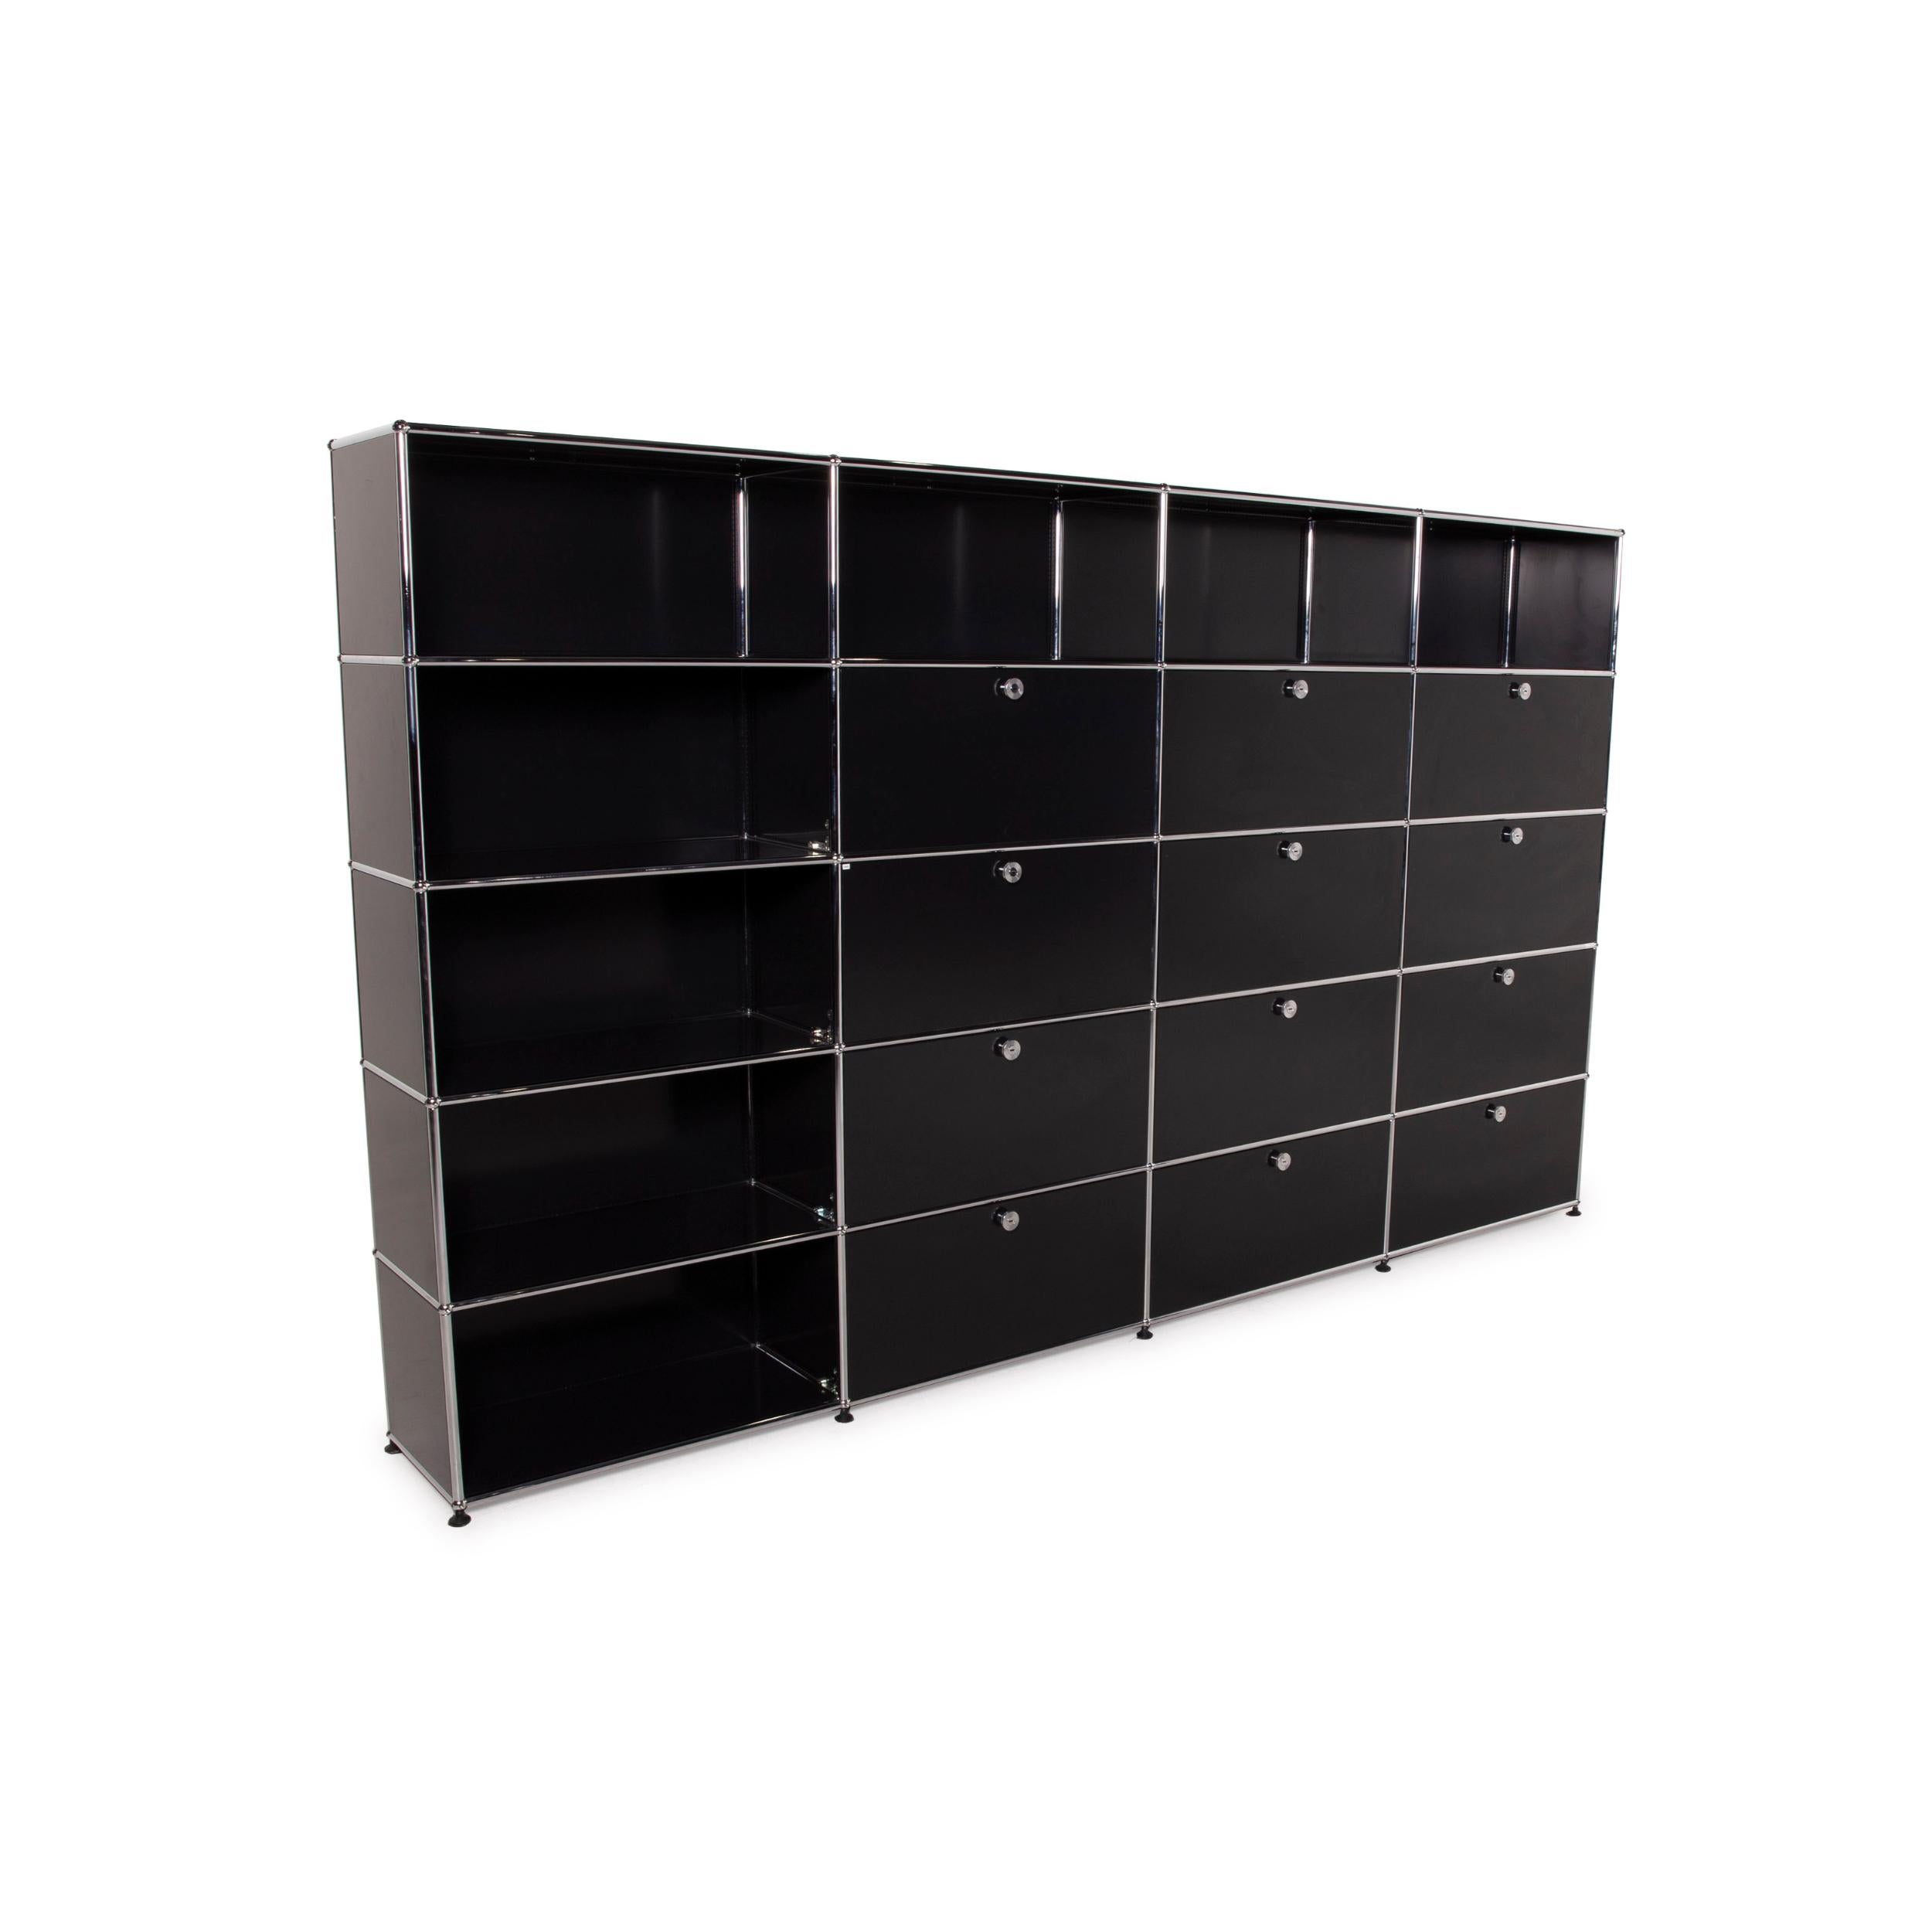 USM Haller Metal Wall Unit Black Shelf 4x5 Compartments Office 2